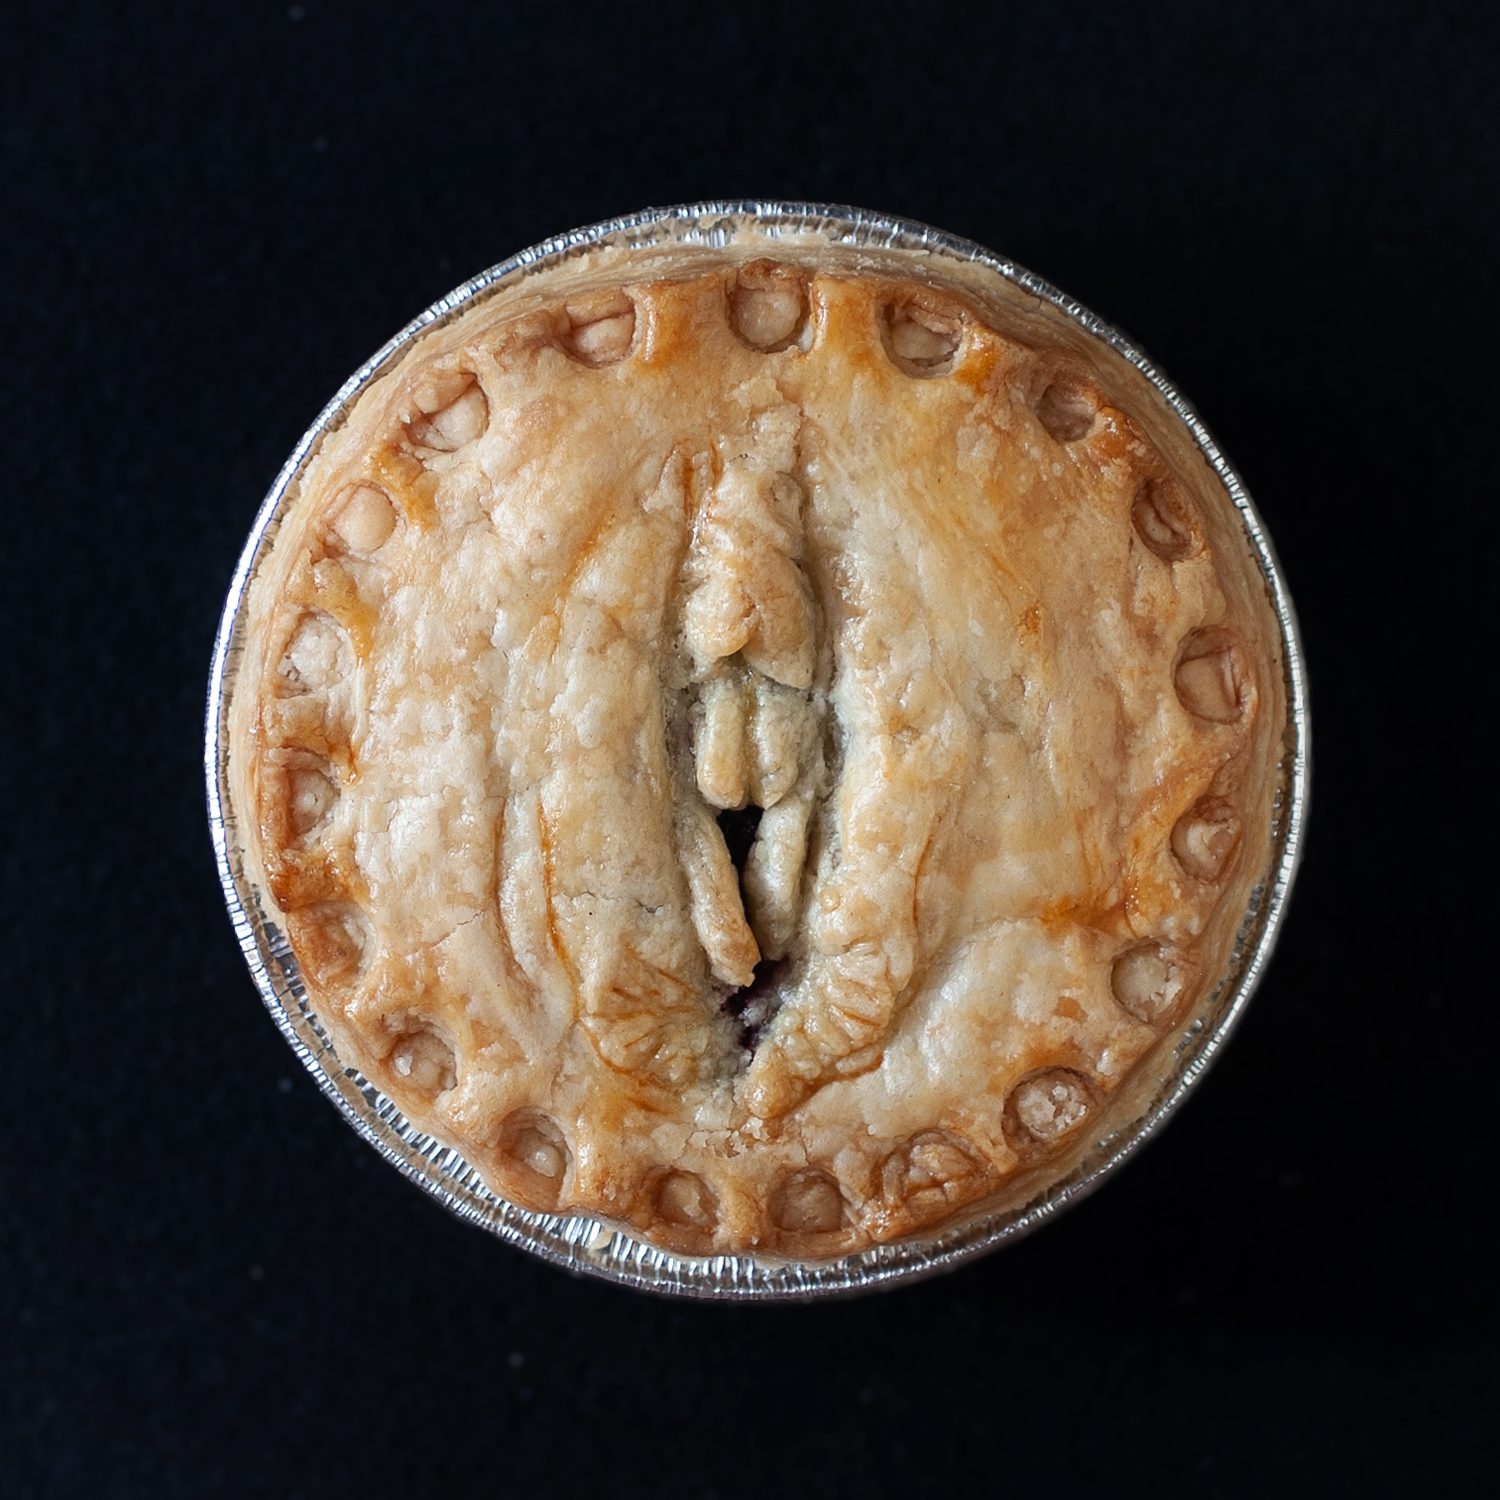 Baked pie 2, pie crust art looks like a vulva